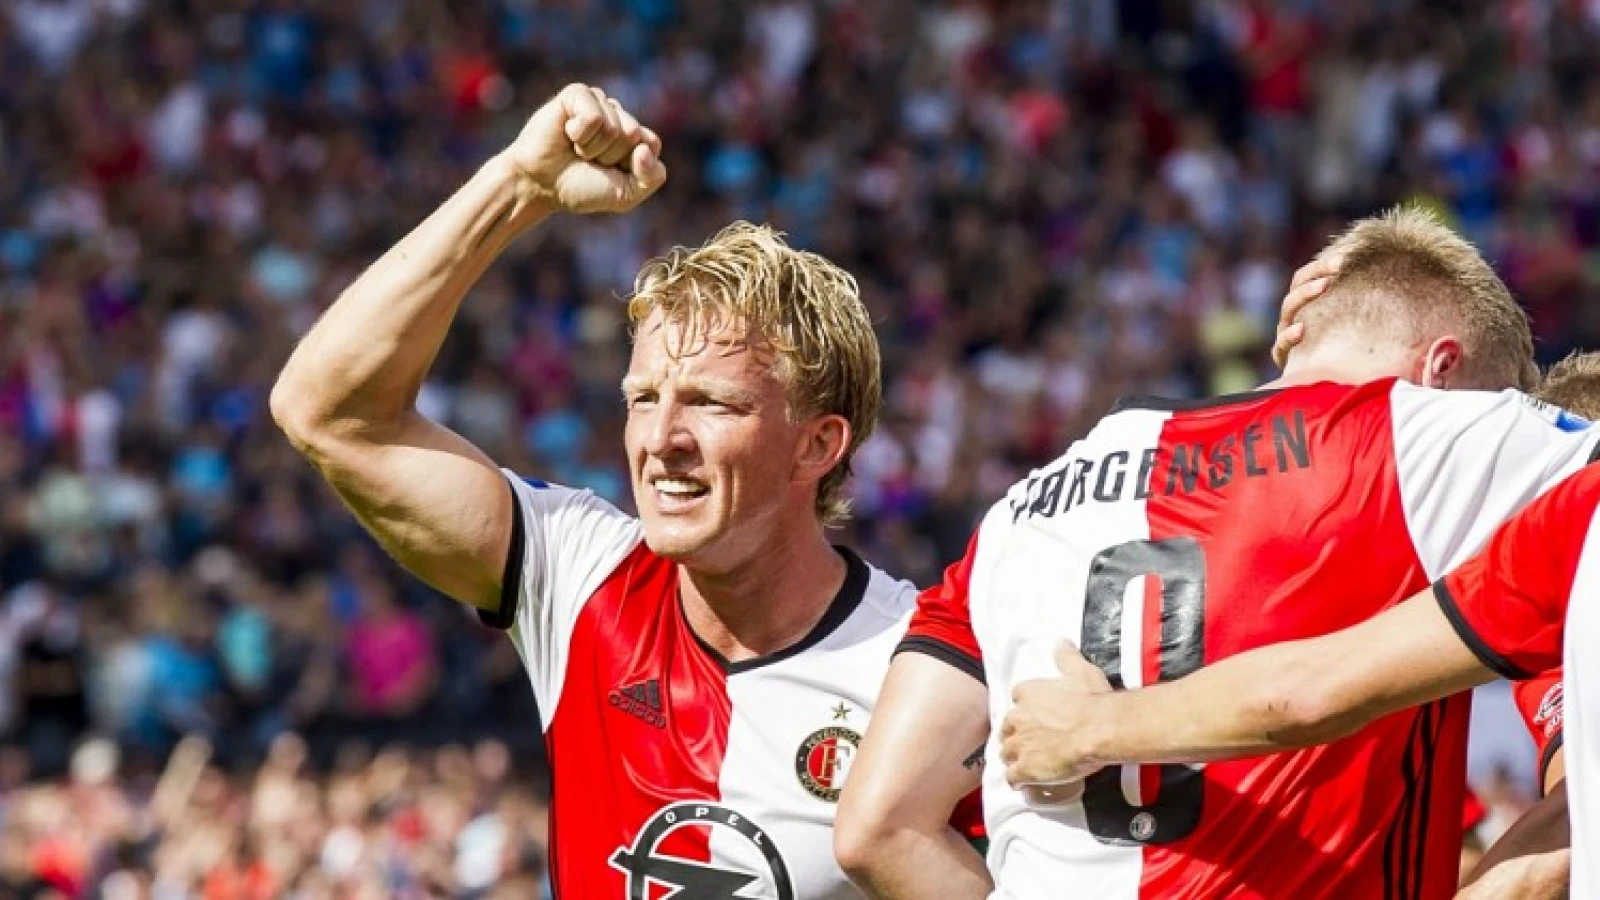 Speelronde 5: Feyenoord soeverein aan kop met vijftien uit vijf